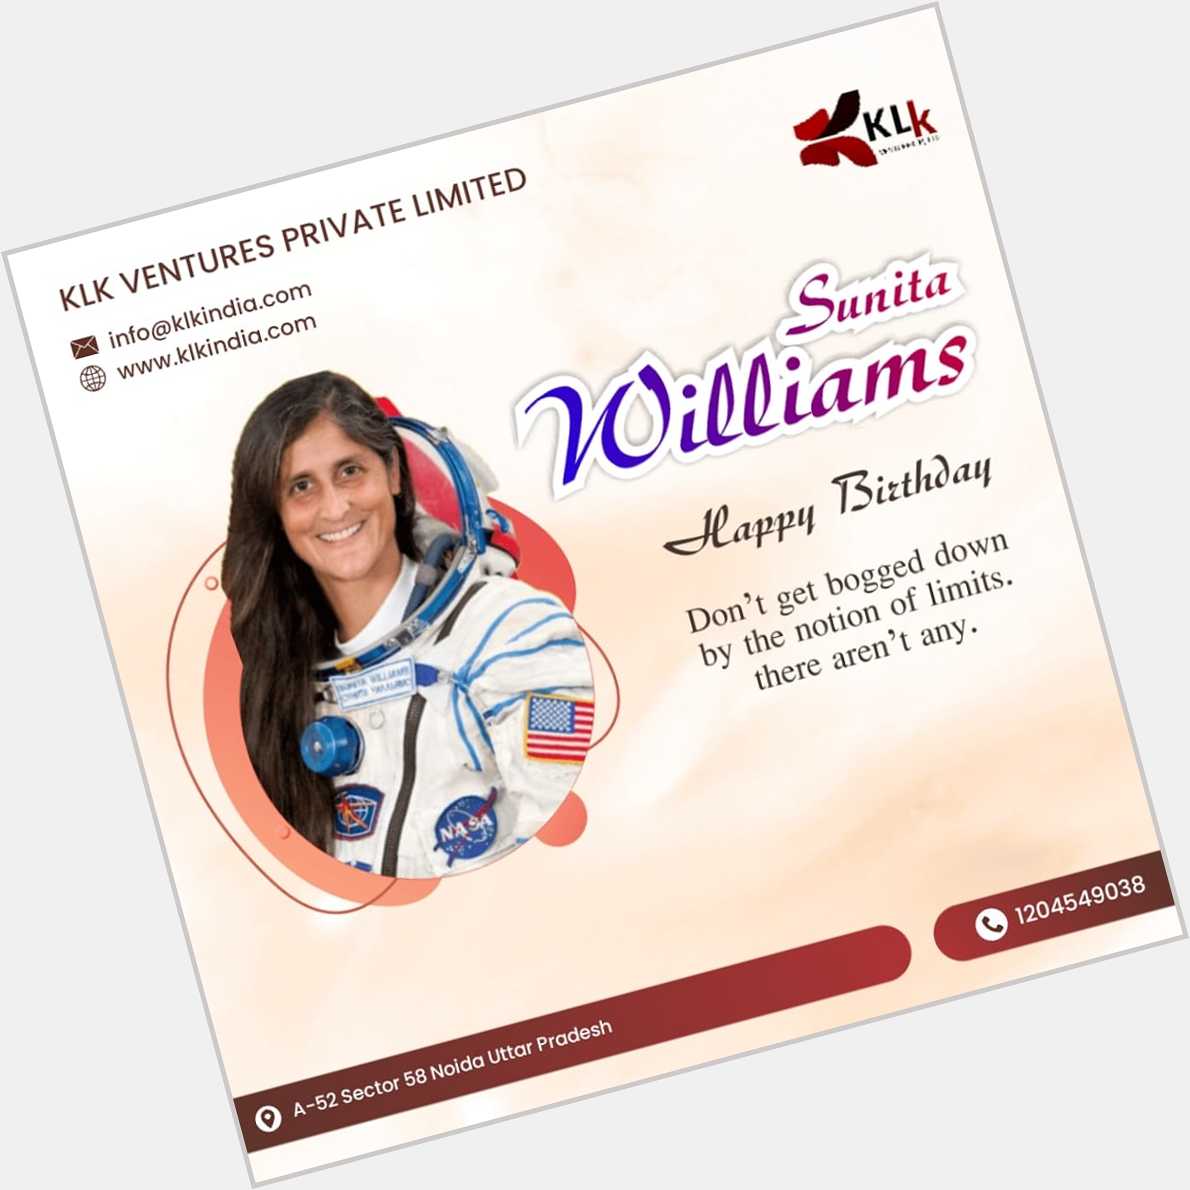 Happy Birthday to NASA Astronaut Sunita Williams! 